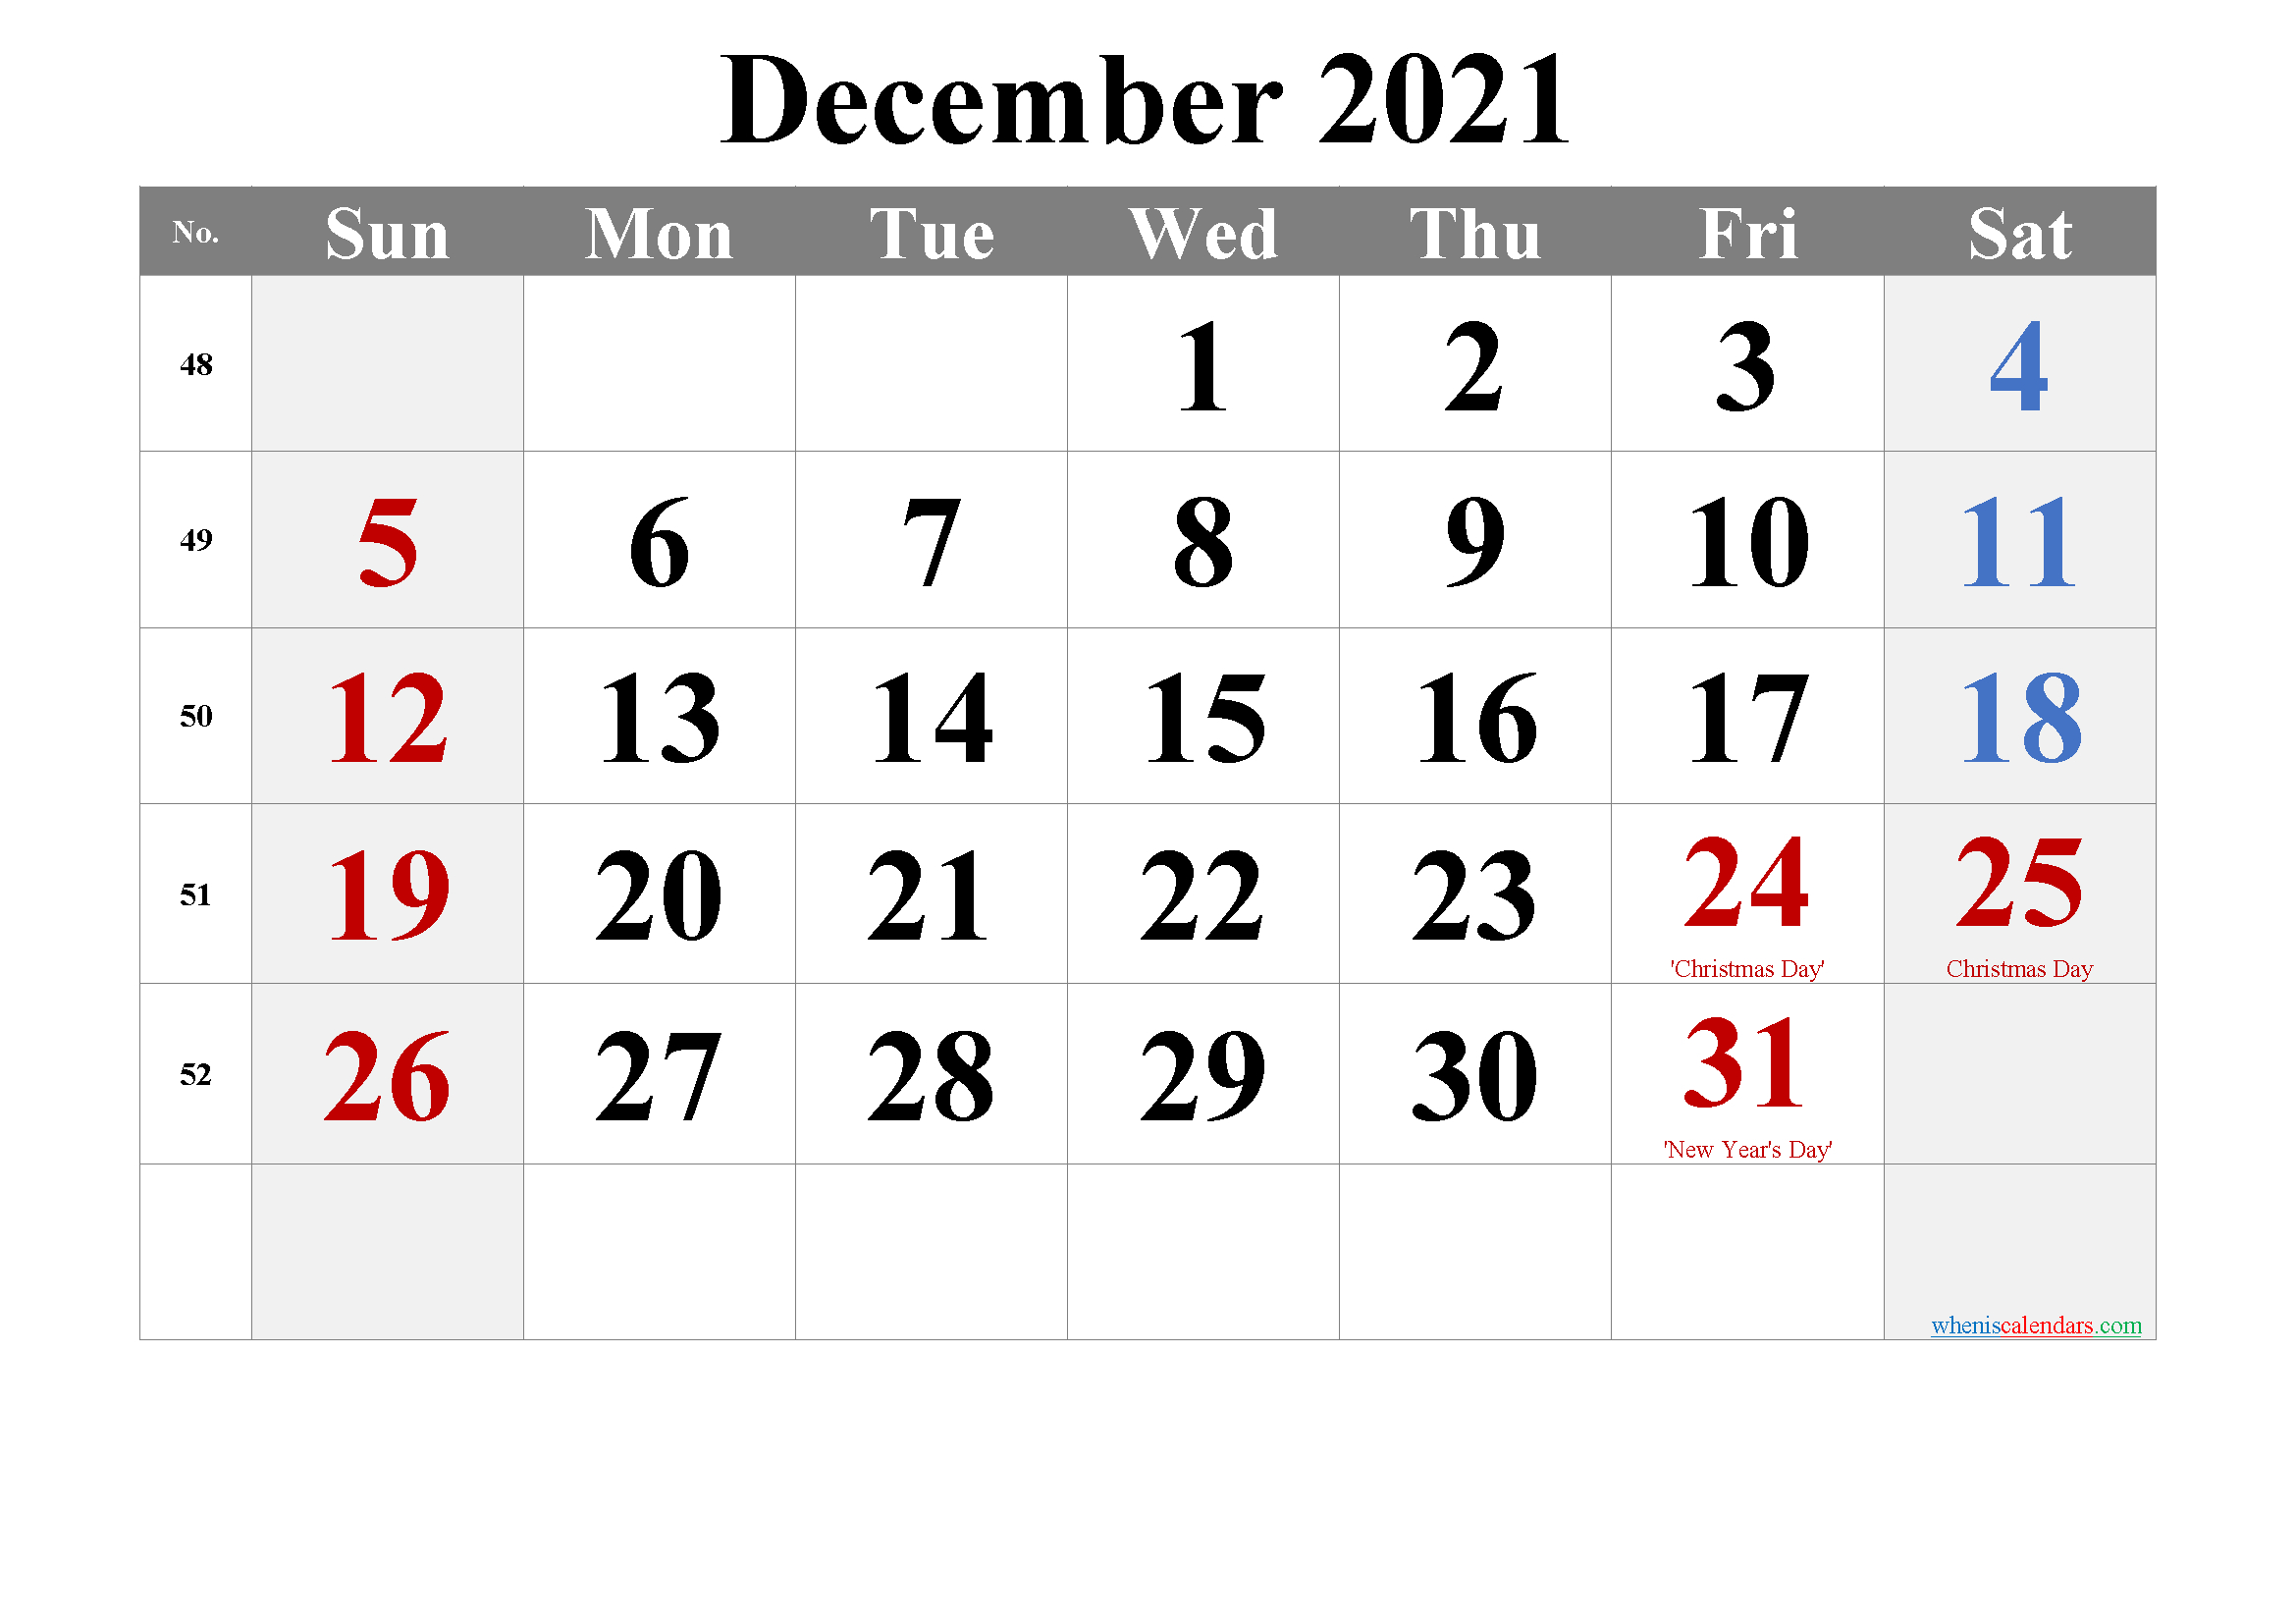 December 2021 Printable Calendar With Holidays - 6